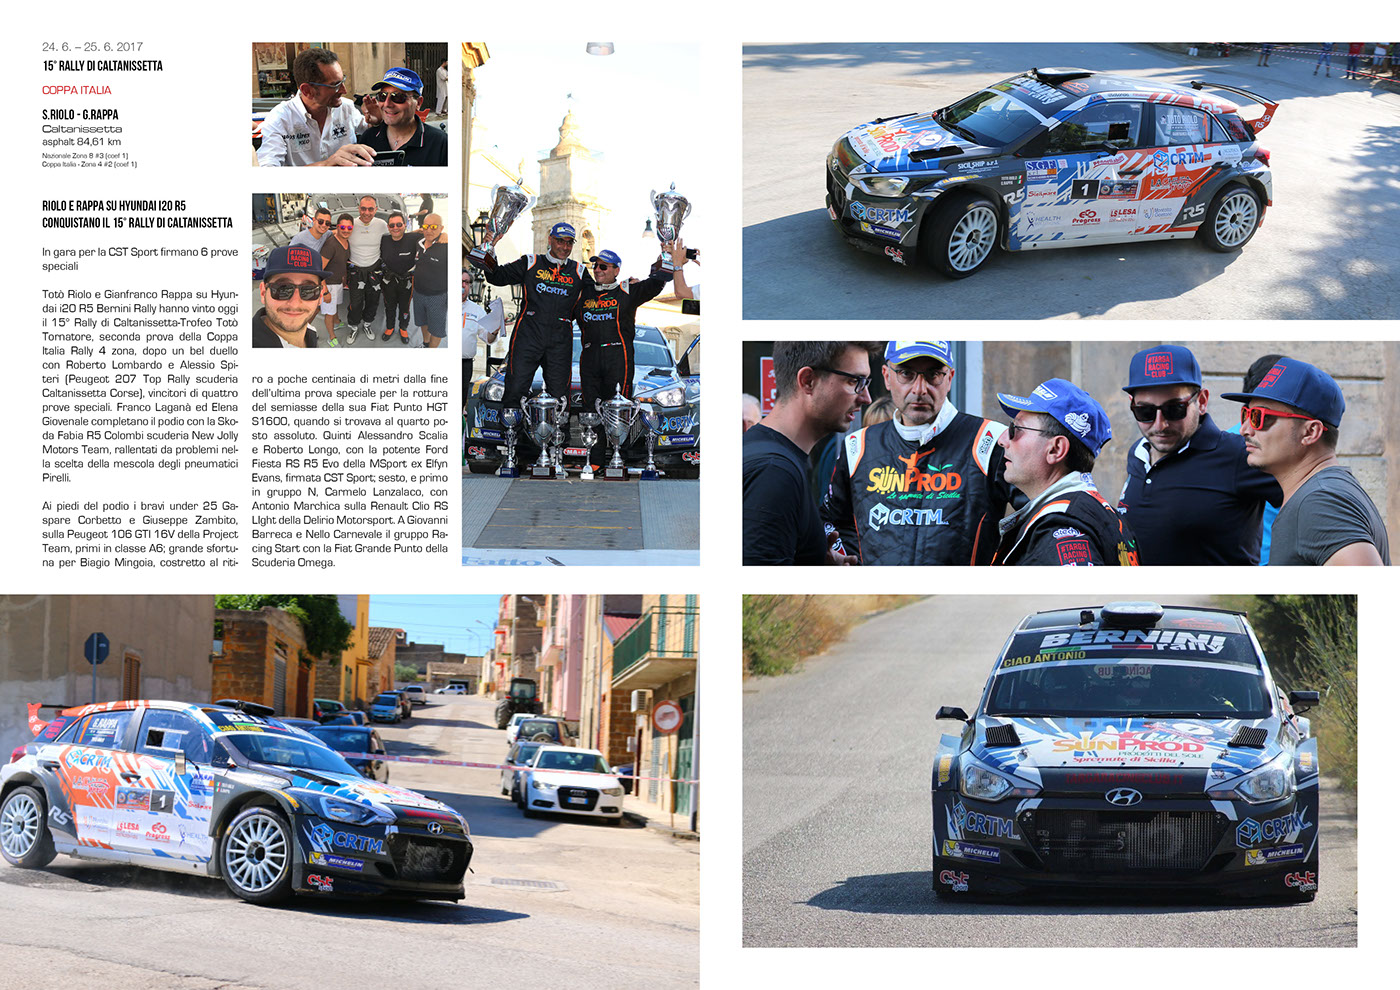 stagione 2017 targa racing club cst sport stampa70 ernygraphics targa florio campionato italiano rally coppa italia rally rally